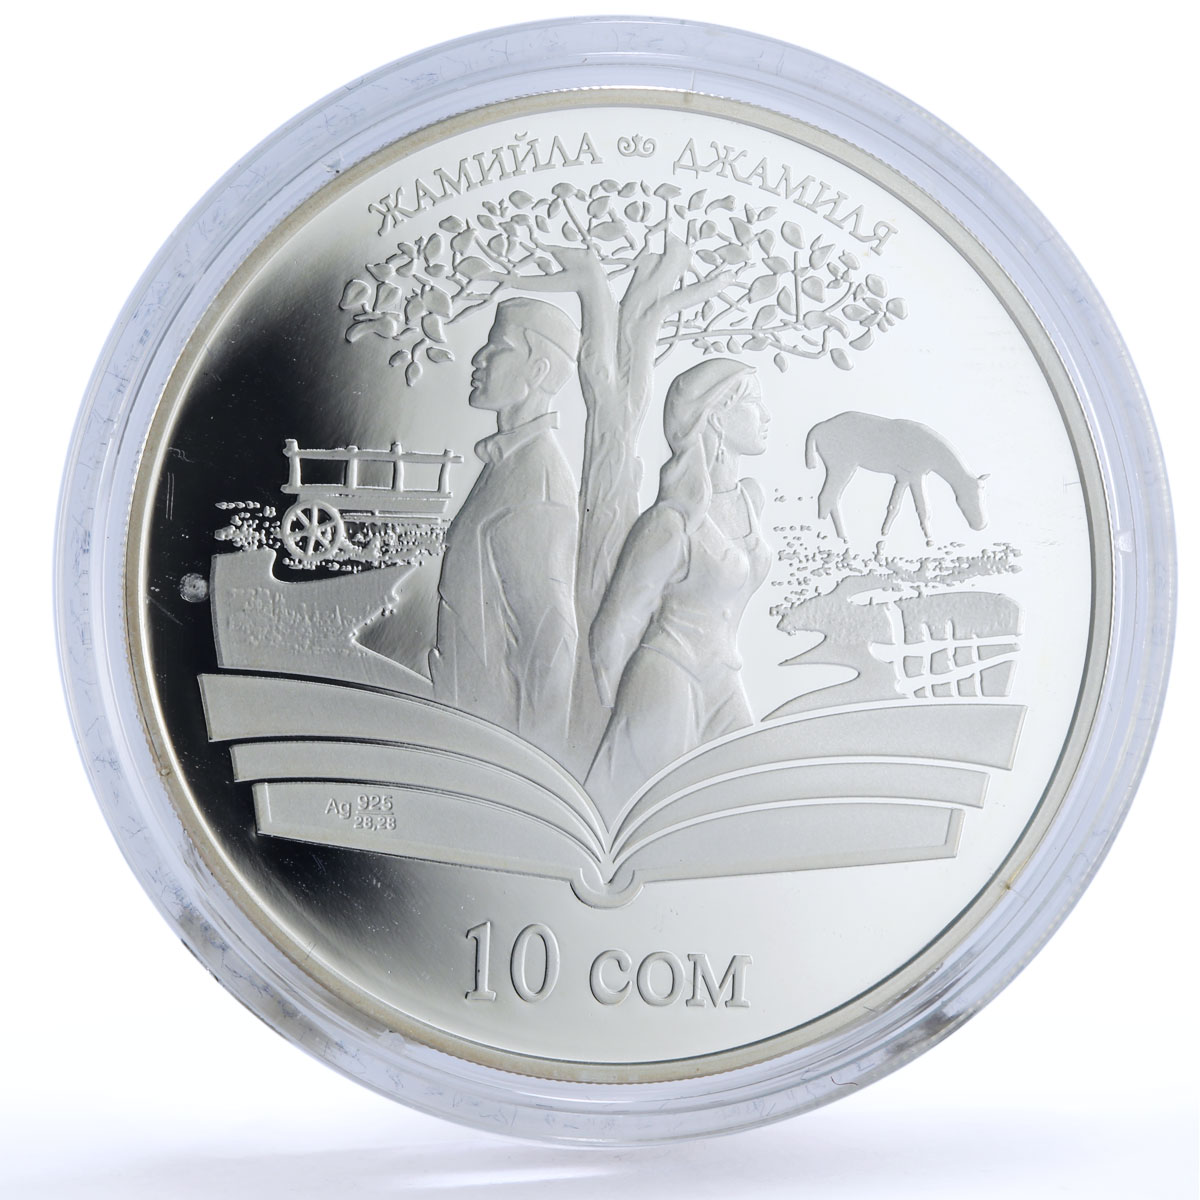 Kyrgyzstan 10 som Chinqiz Aitmatov Jamilya Literature proof silver coin 2009